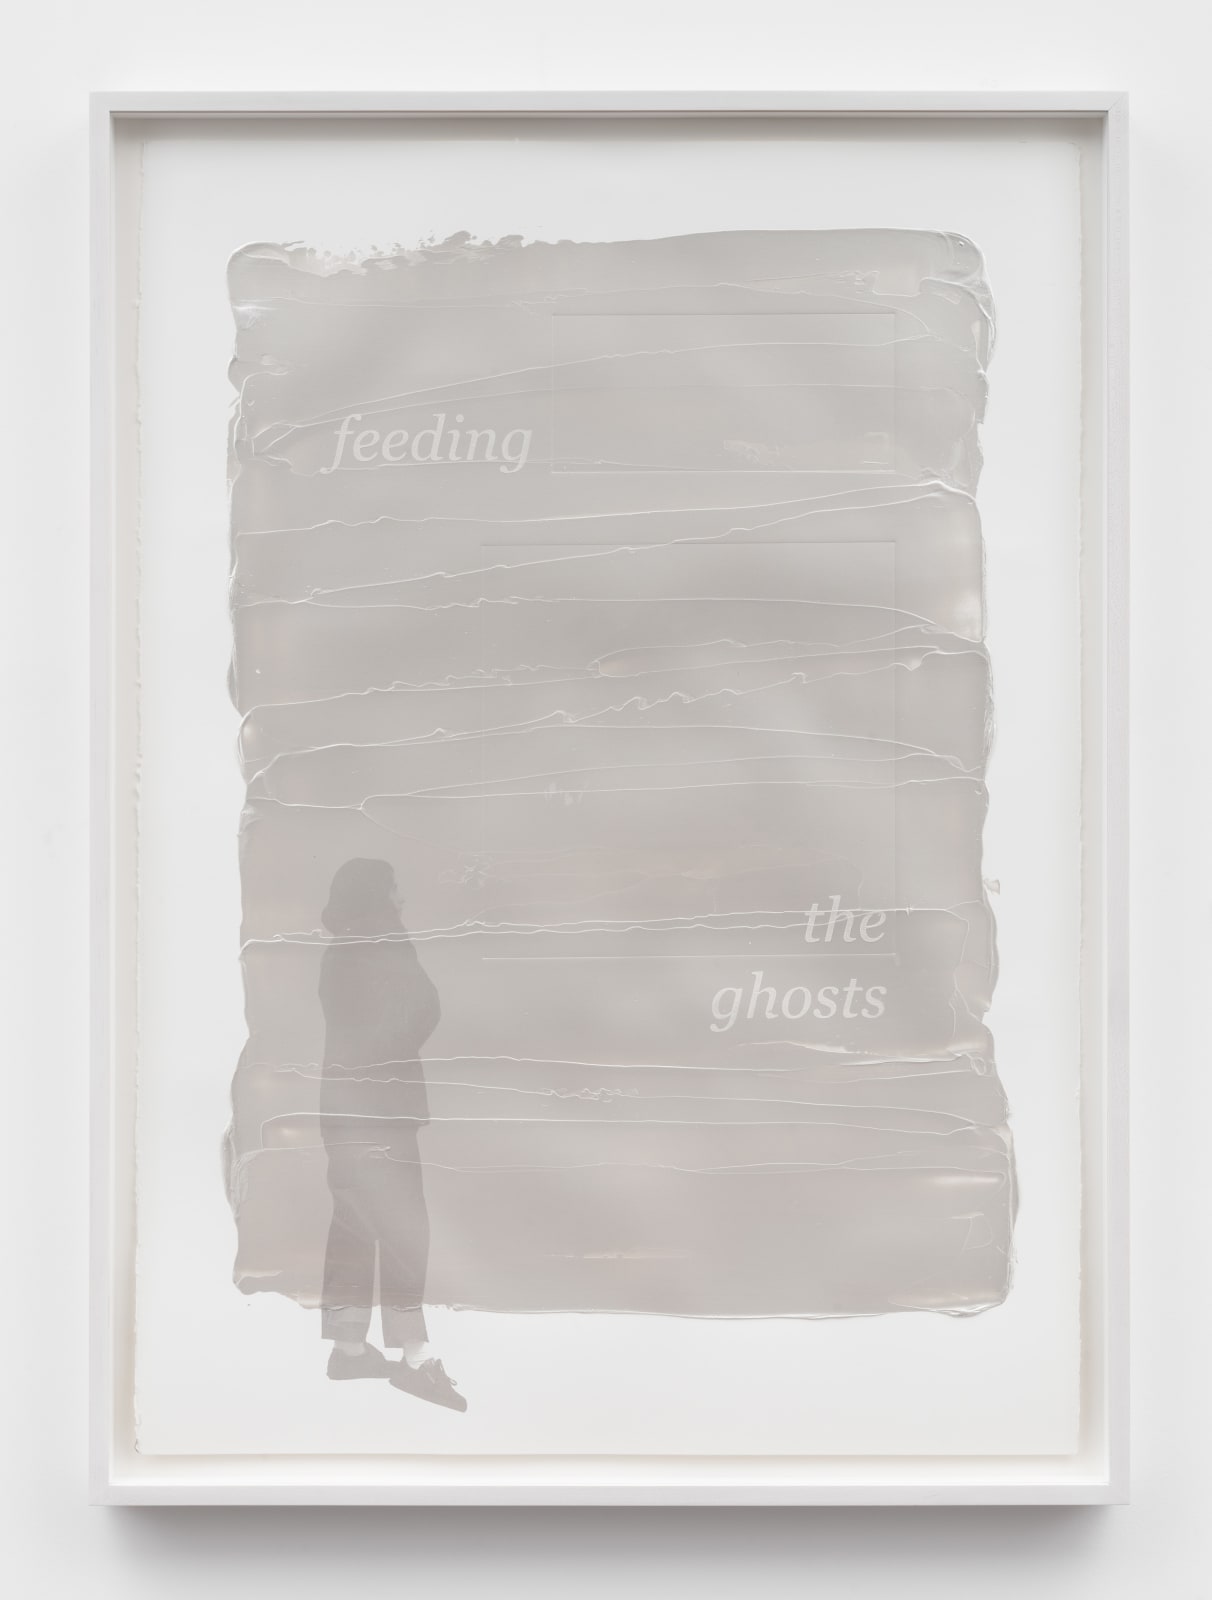 Andrea Geyer, Shadow Box (feeding the ghosts), 2019